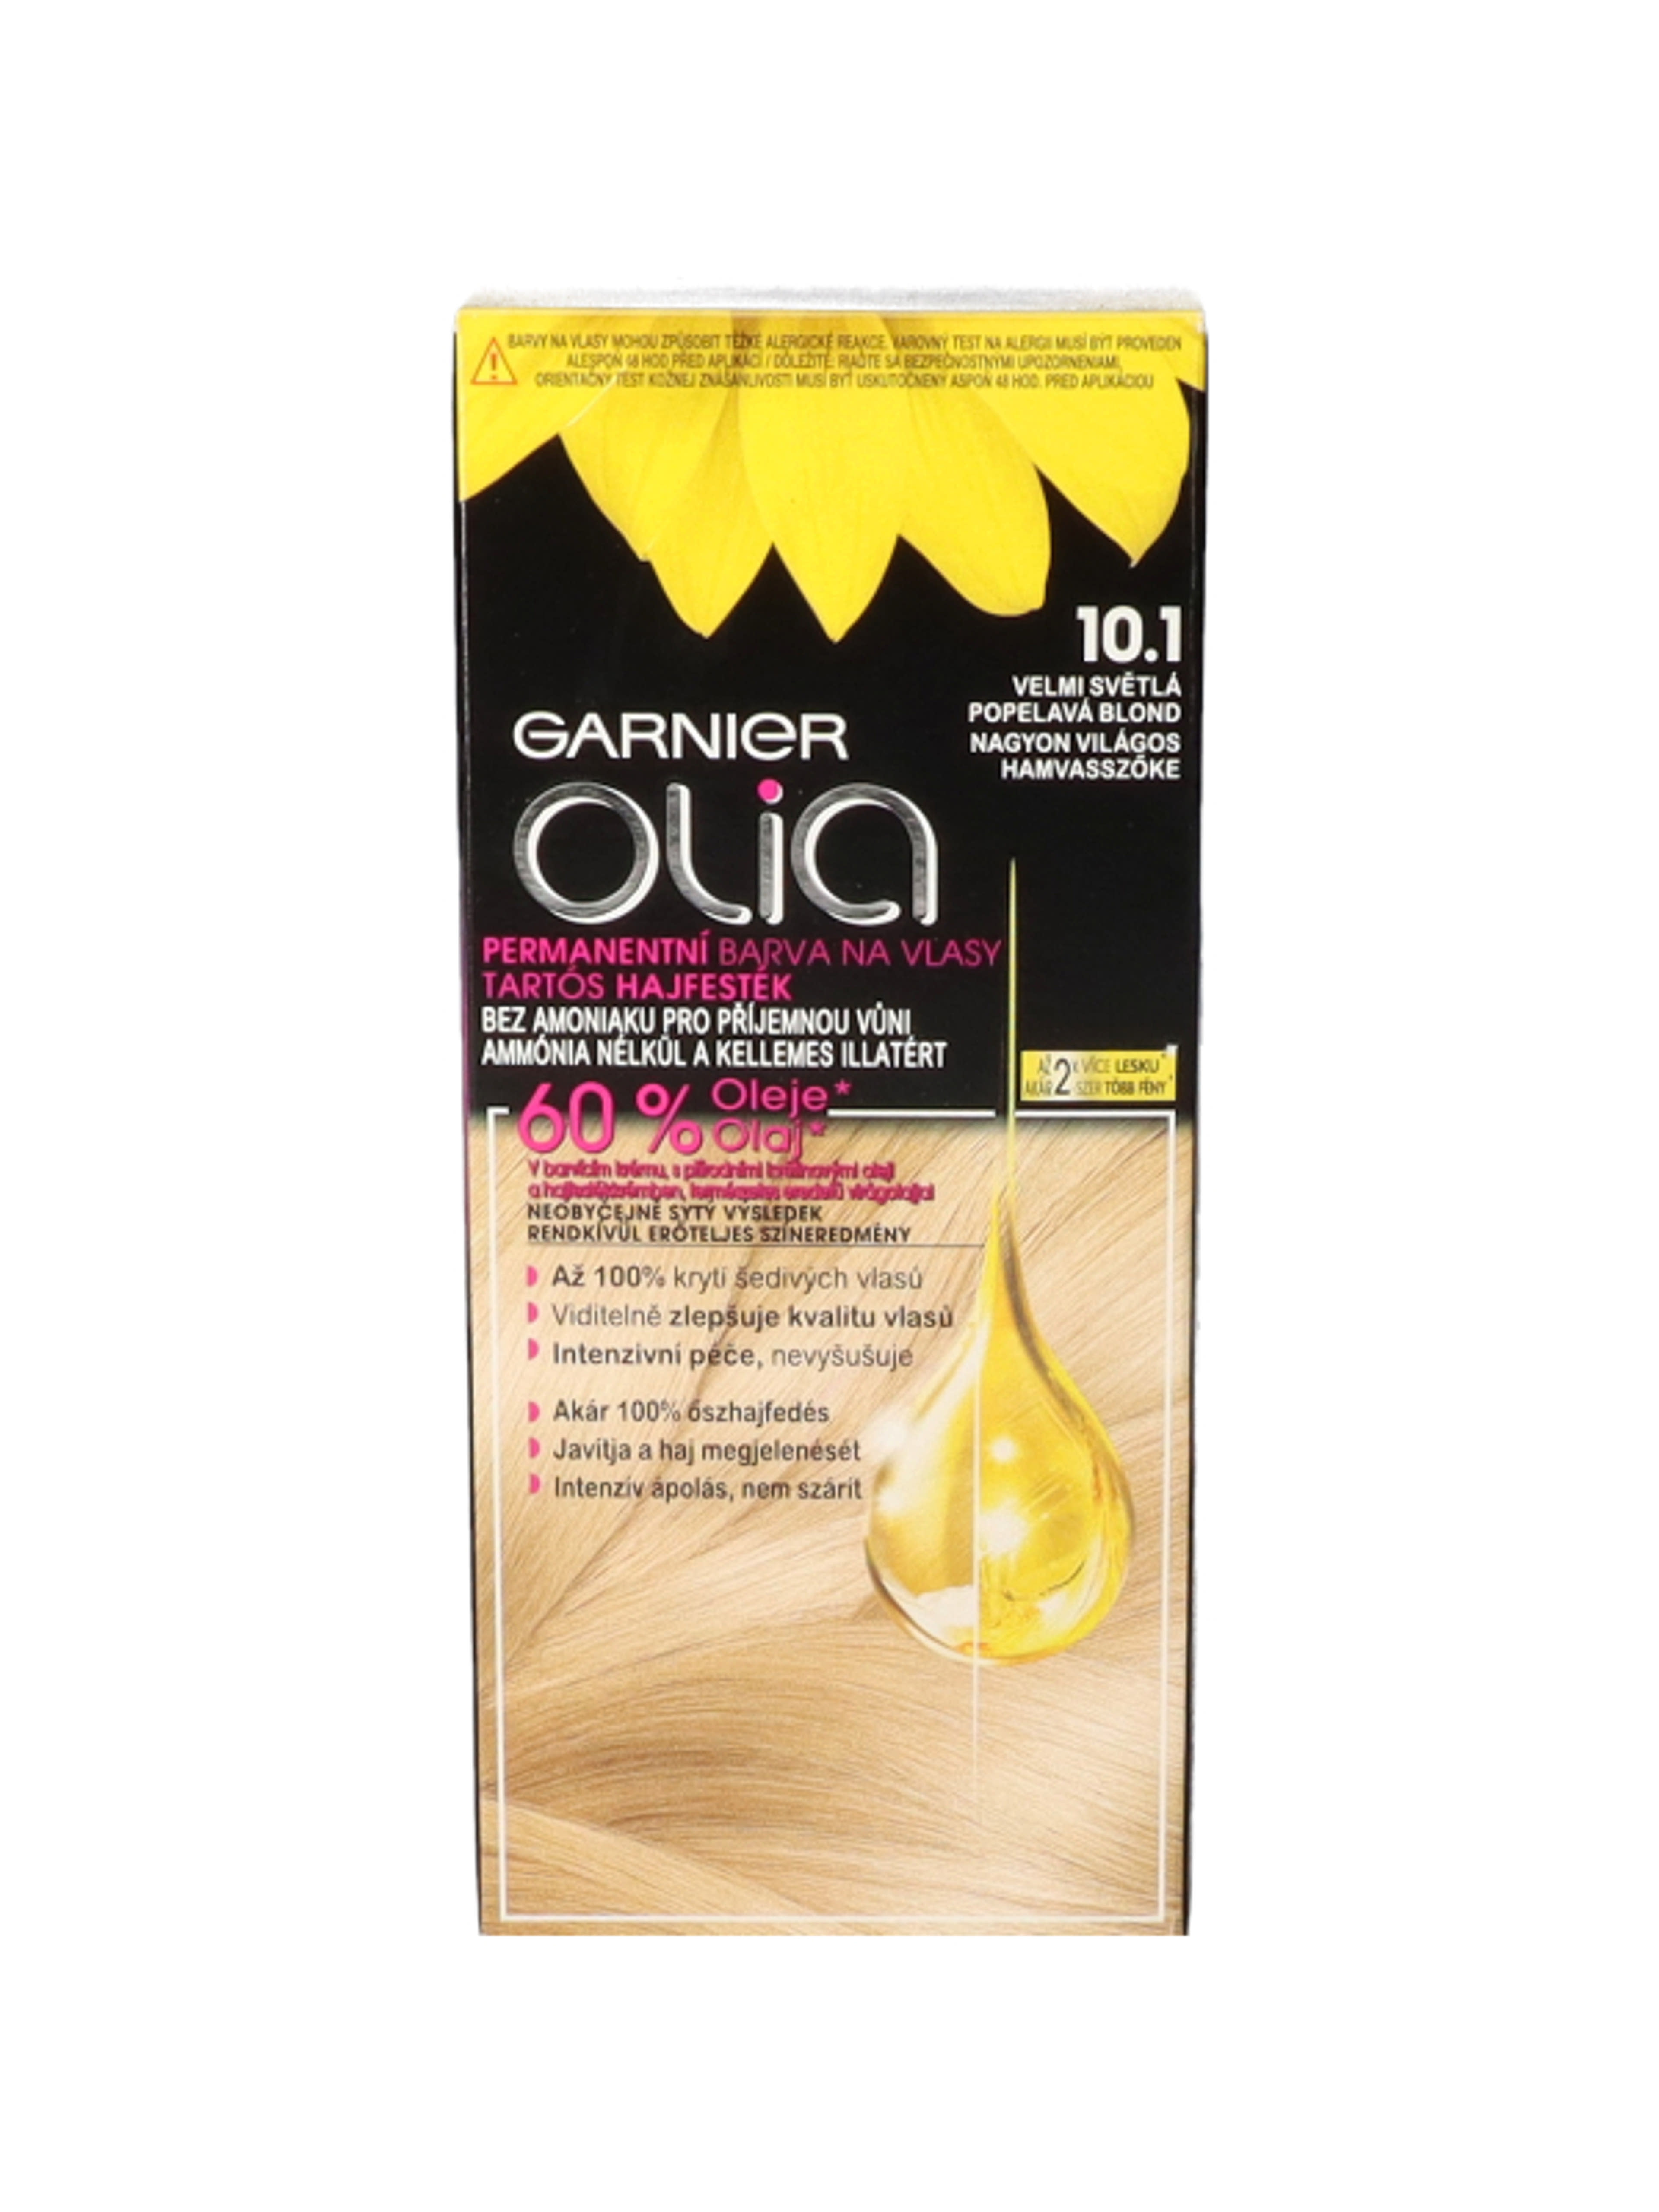 Garnier Olia tartós hajfesték 10.1 Nagyon világos hamvasszőke - 1 db-3